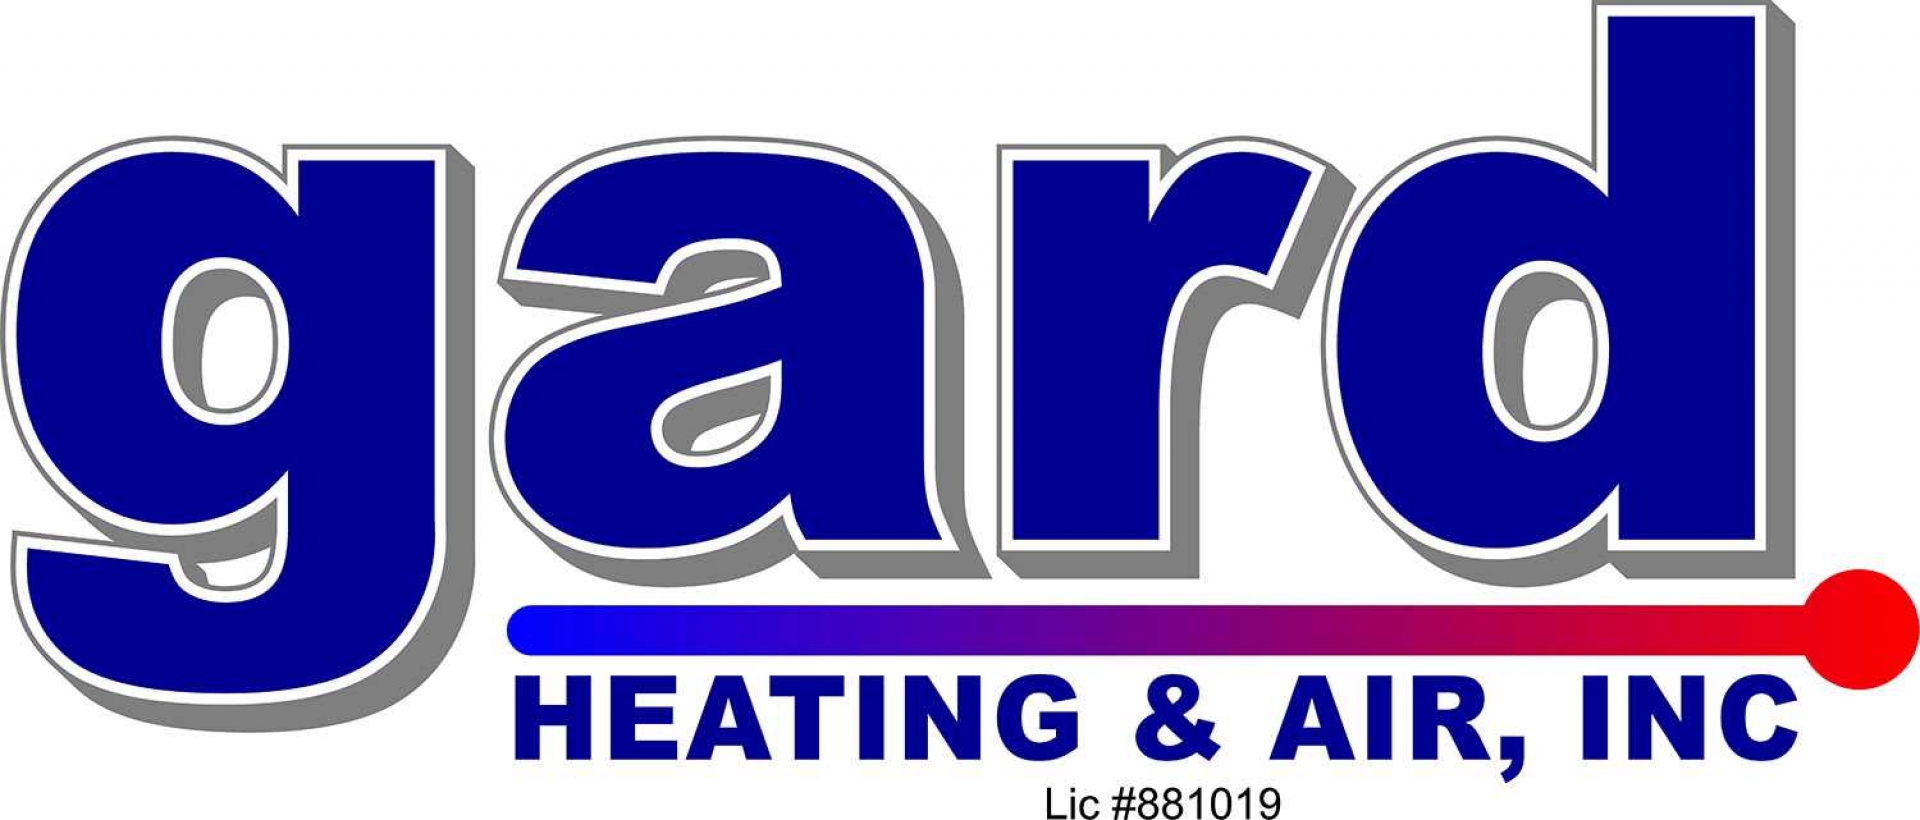 Gard Heating & Air, Inc company logo